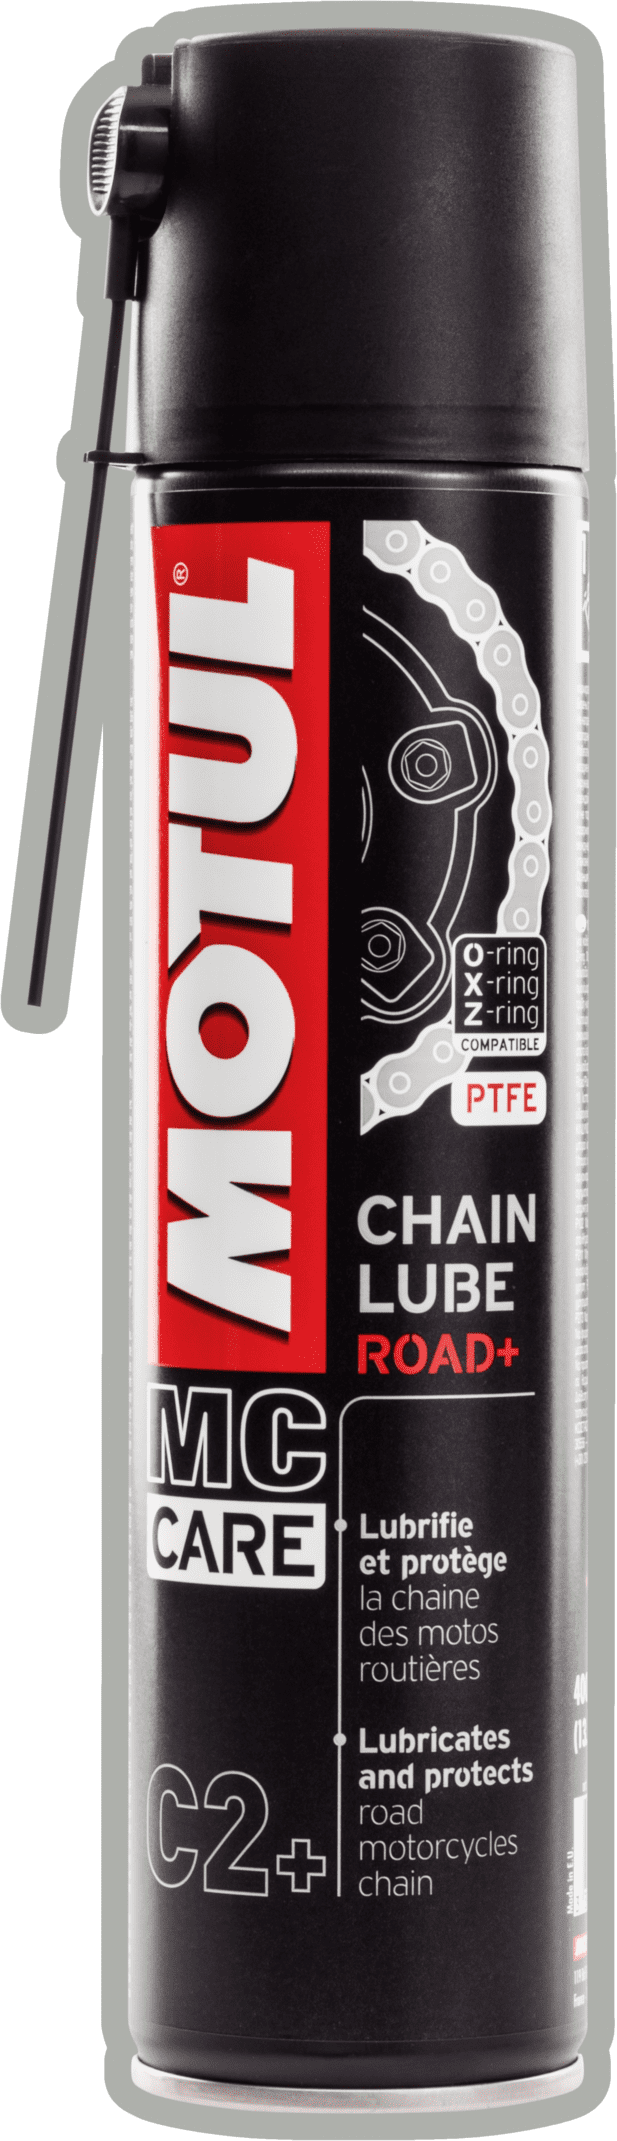 Motul MC Care C2+ Chain Lube Road, 400 ml